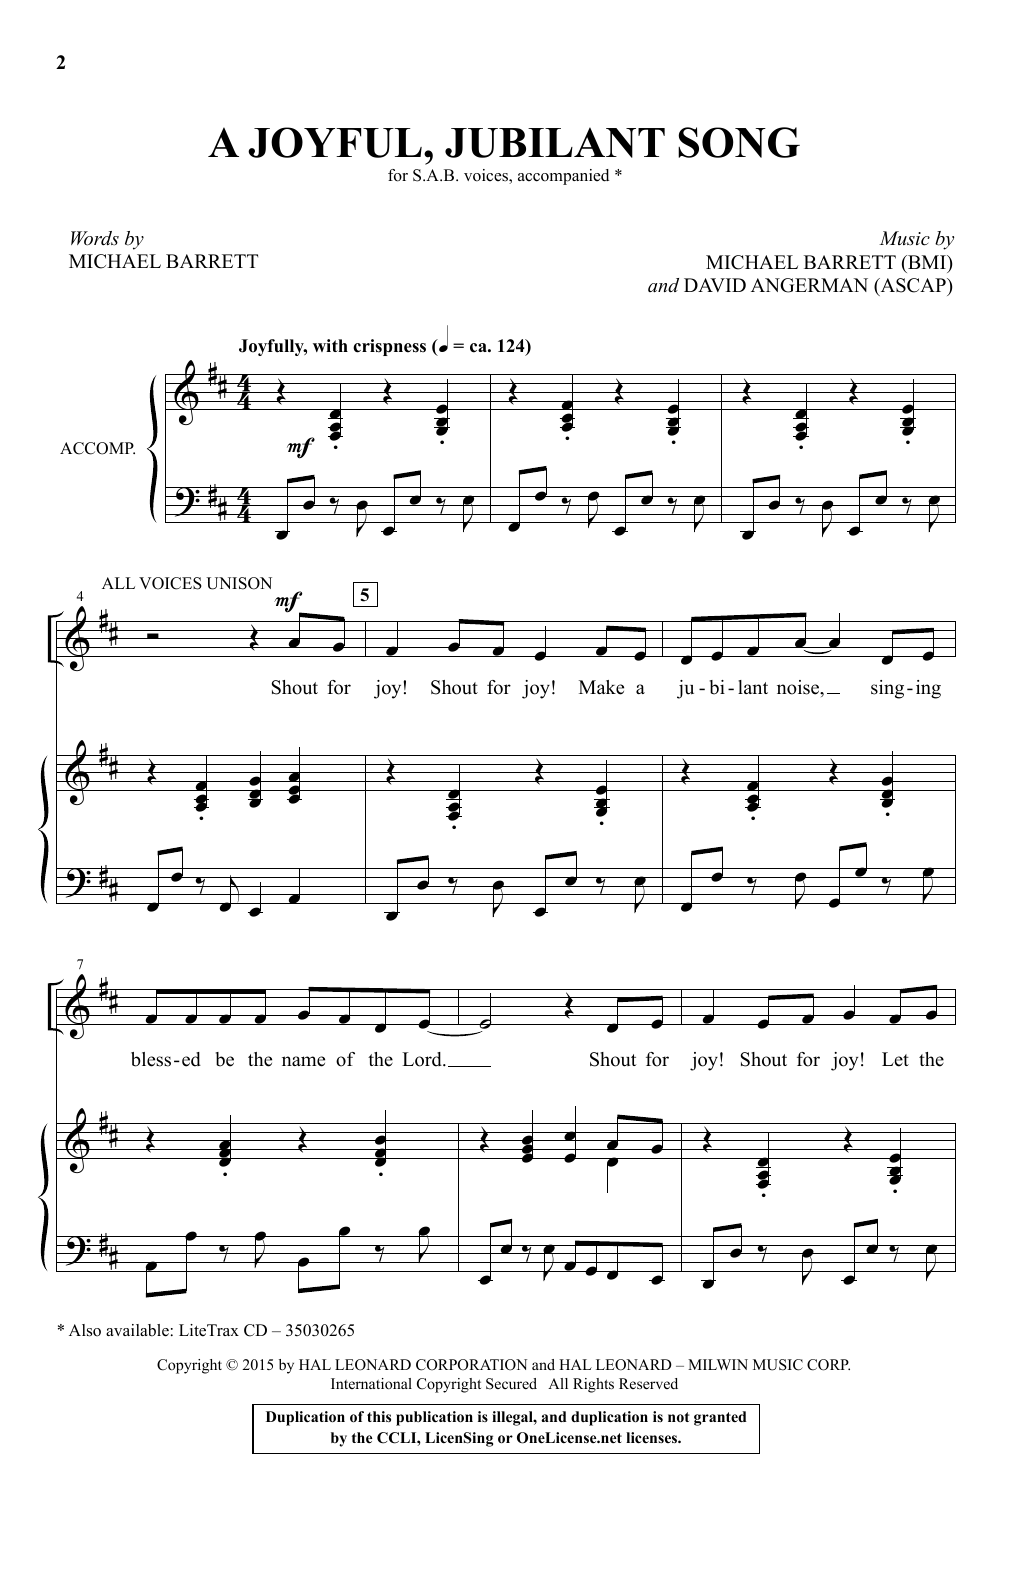 Michael Barrett A Joyful, Jubilant Song Sheet Music Notes & Chords for SAB - Download or Print PDF